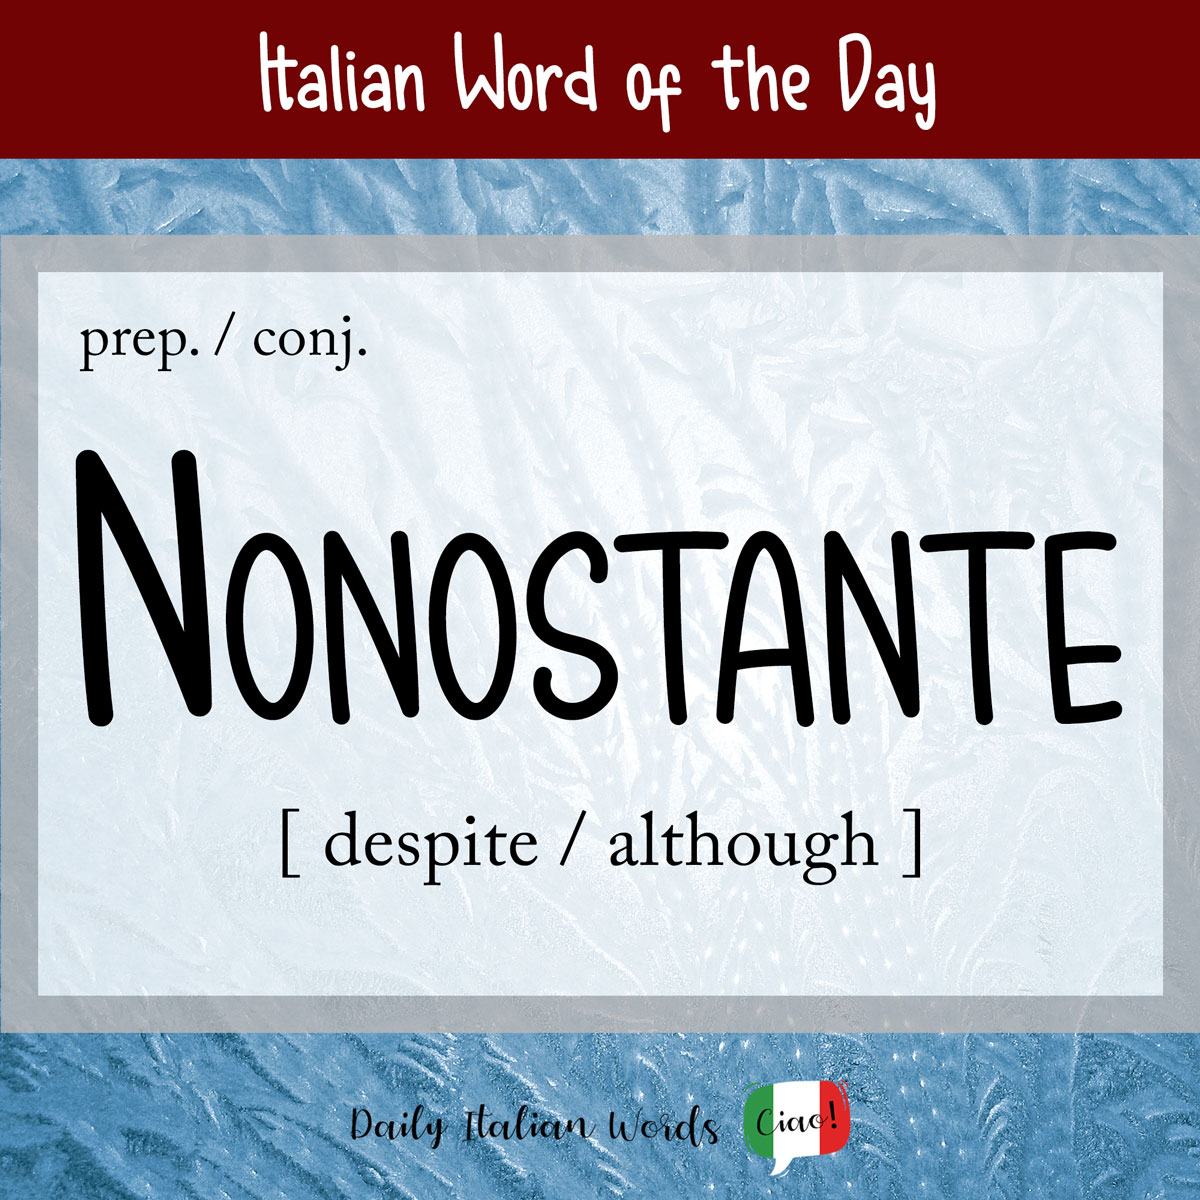 Italian Phrase of the Day: Nonostante (regardless of / though)